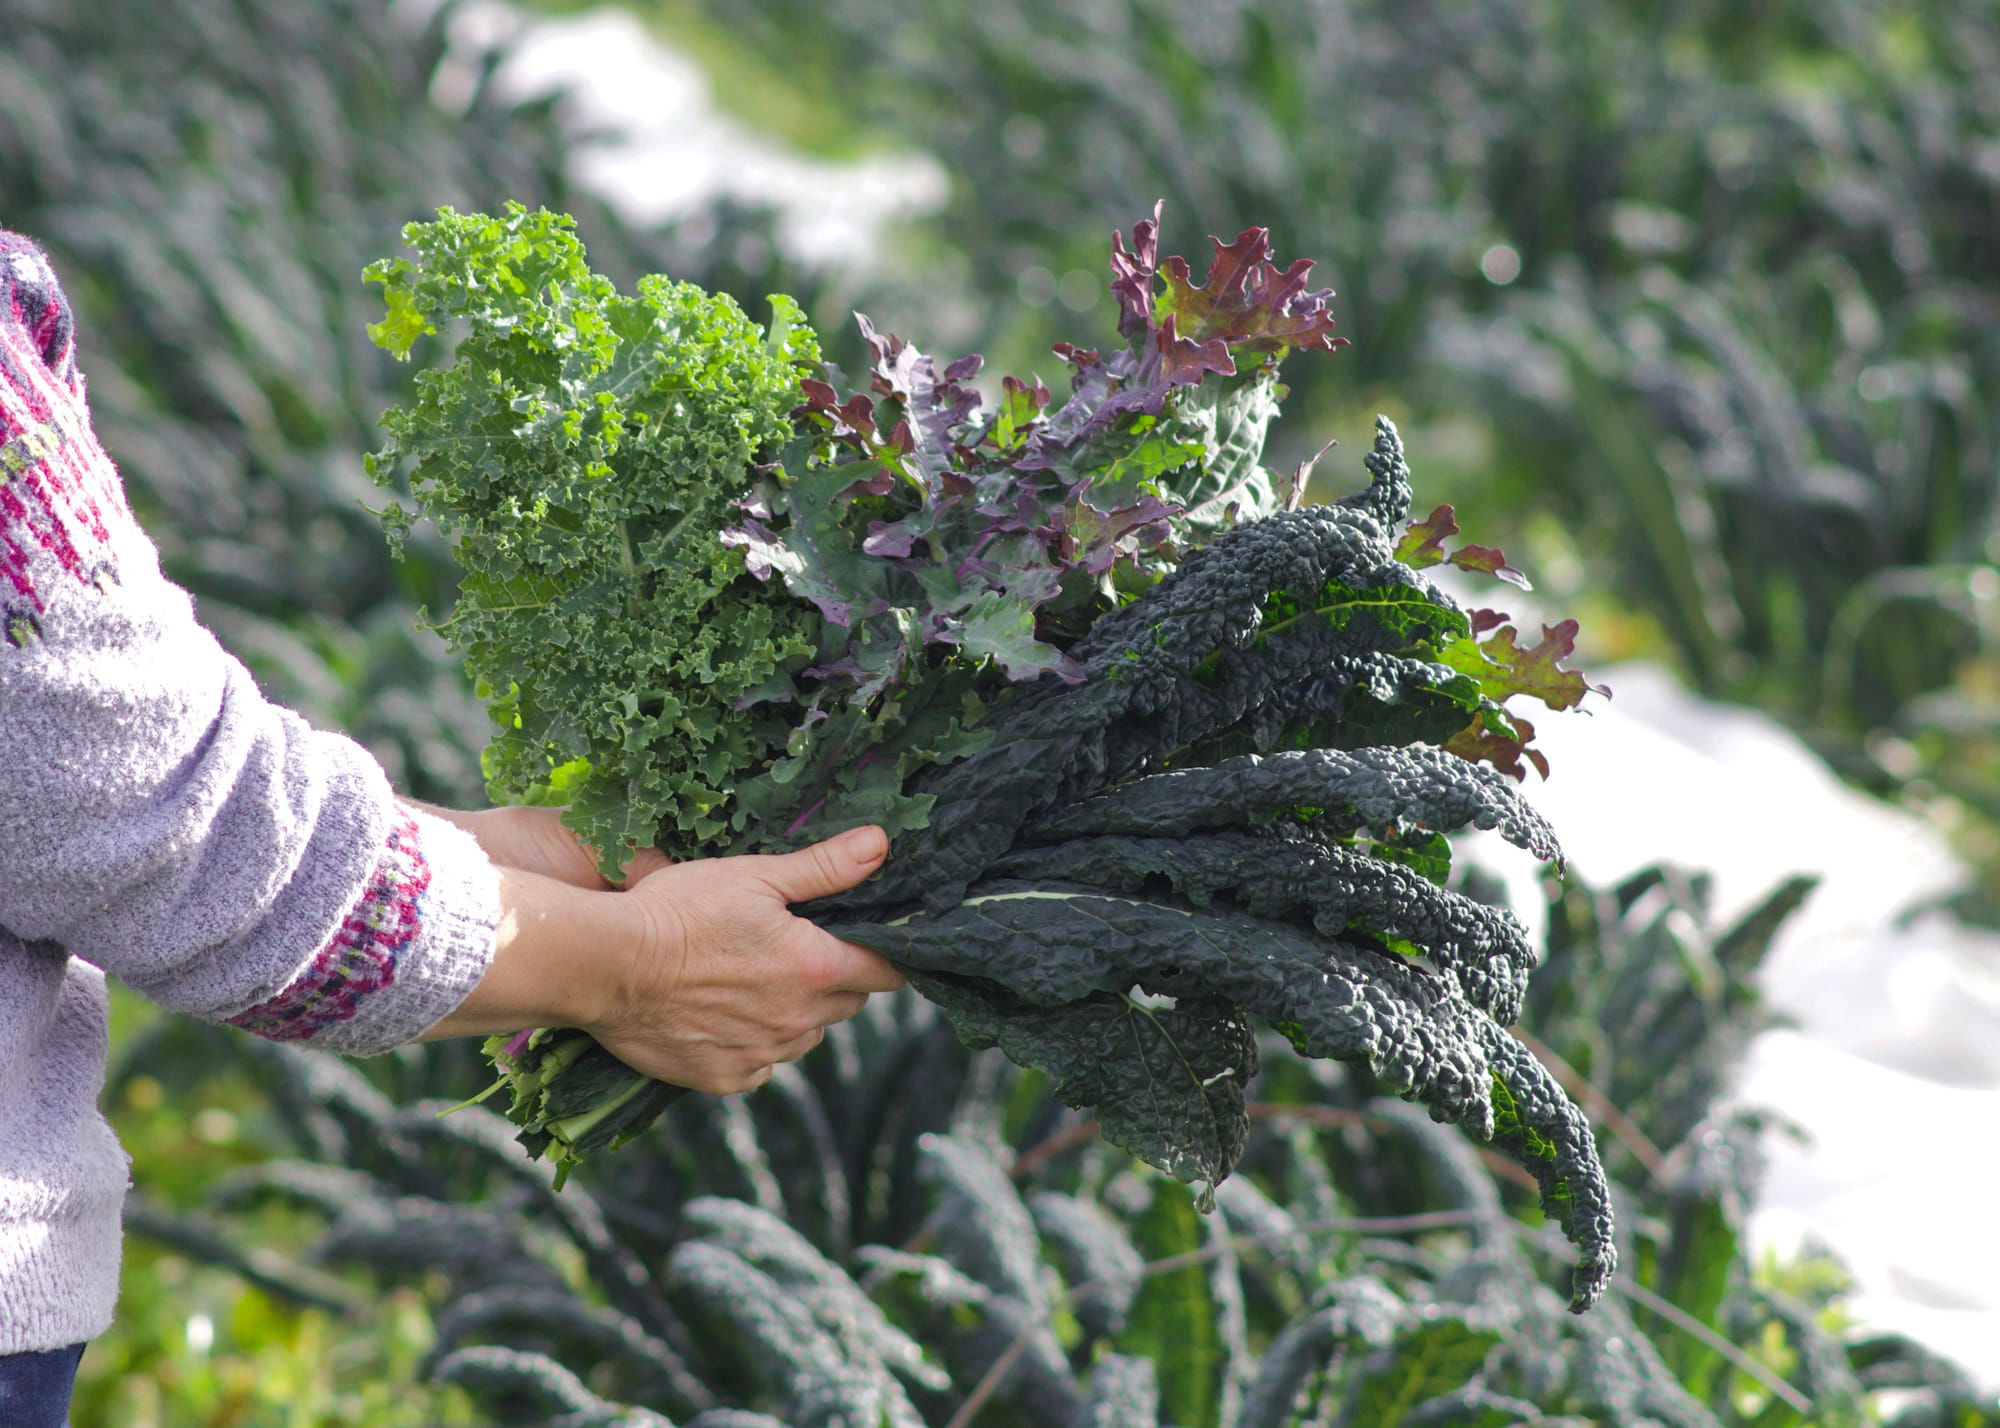 Get a kick from organic kale